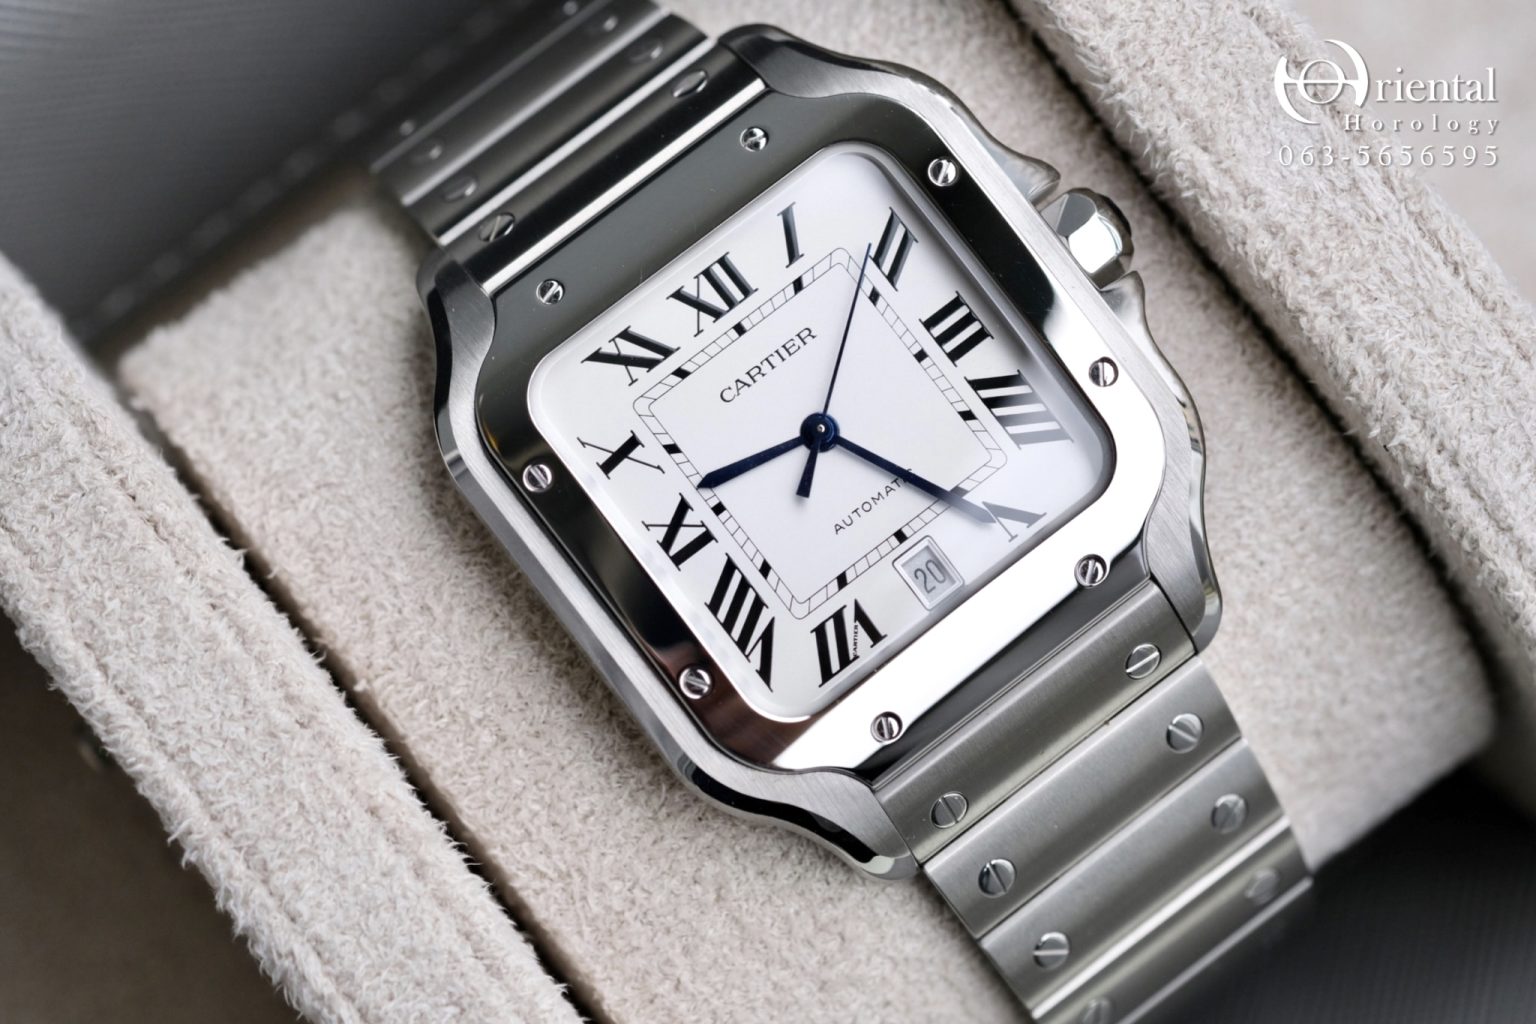 Fella Makafui Spend GH¢100k+ On Santos De Cartier Watch